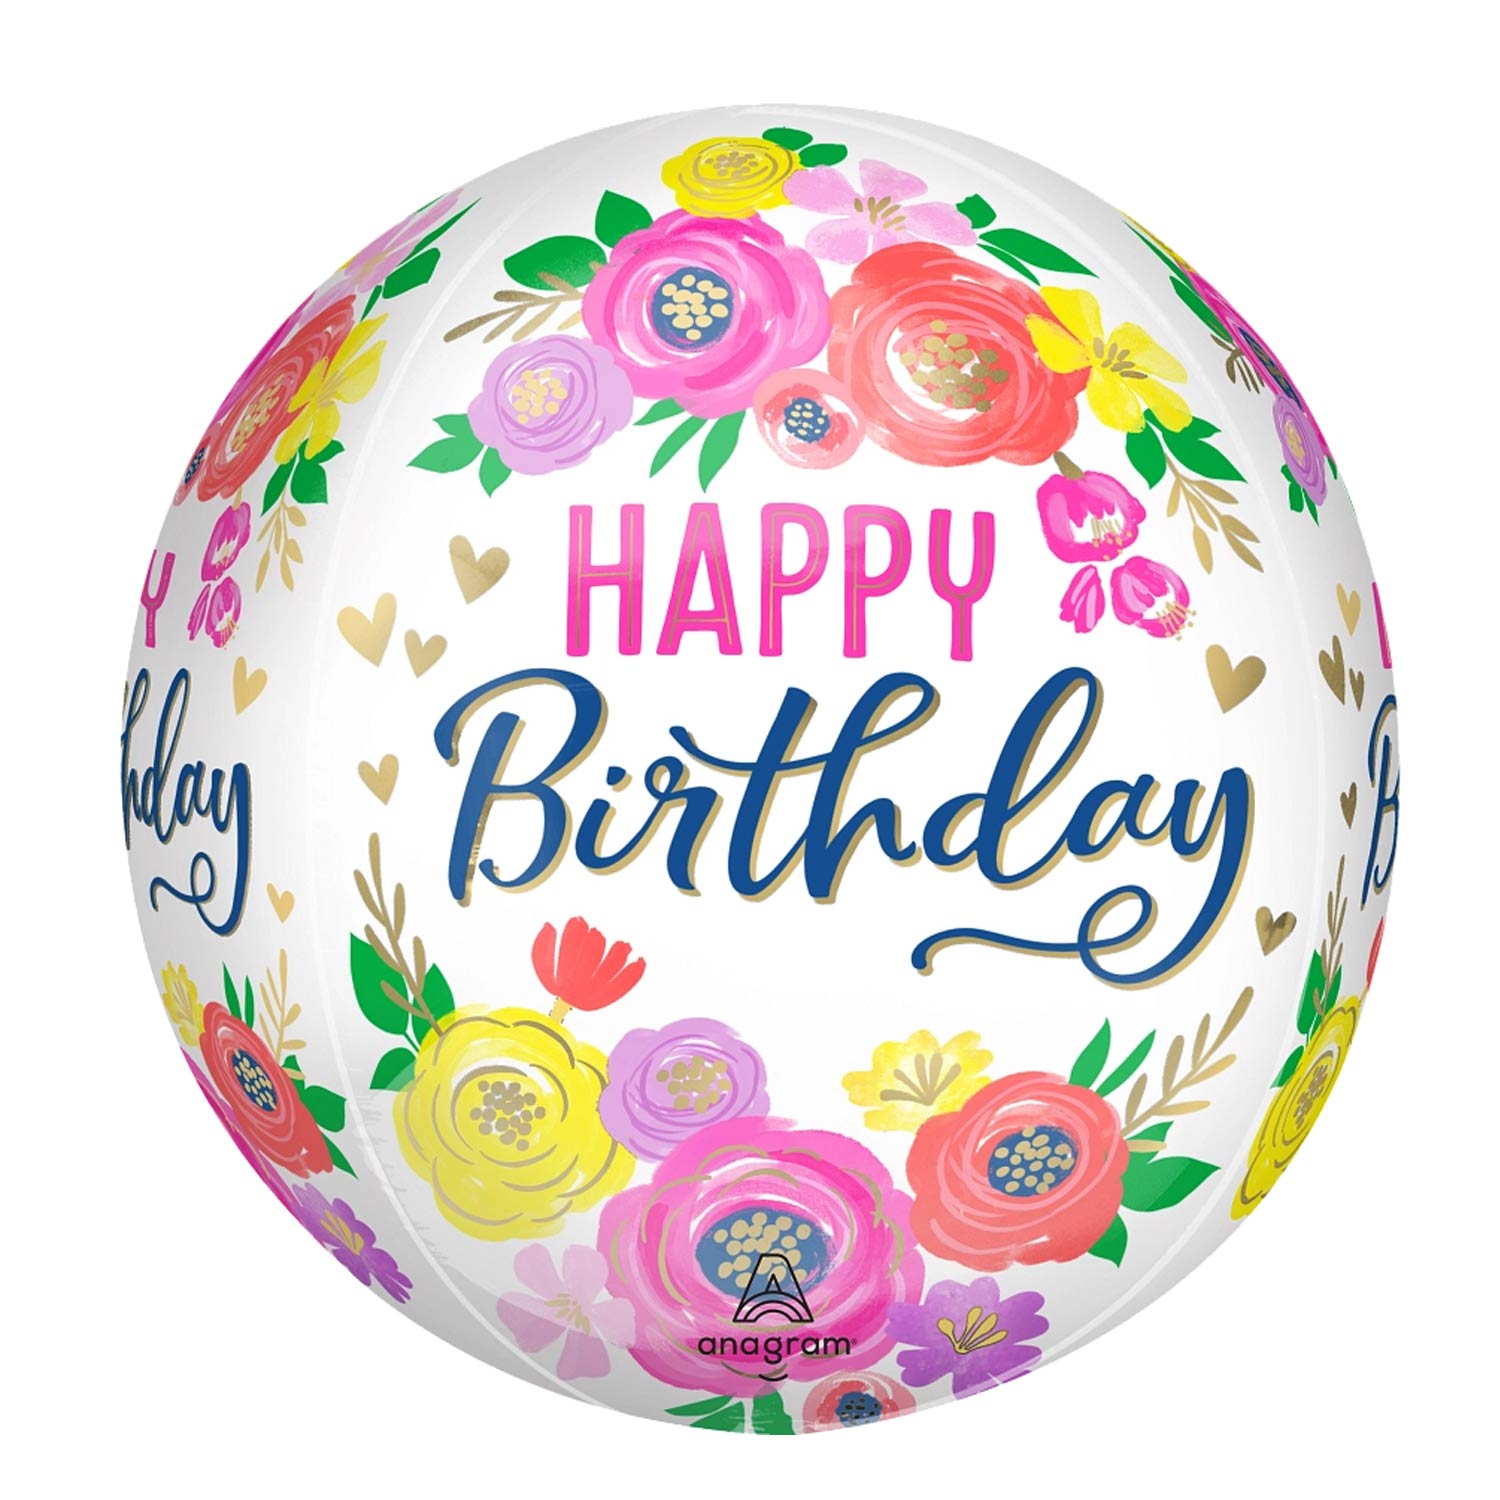 Artful Floral Birthday Orbz Balloon